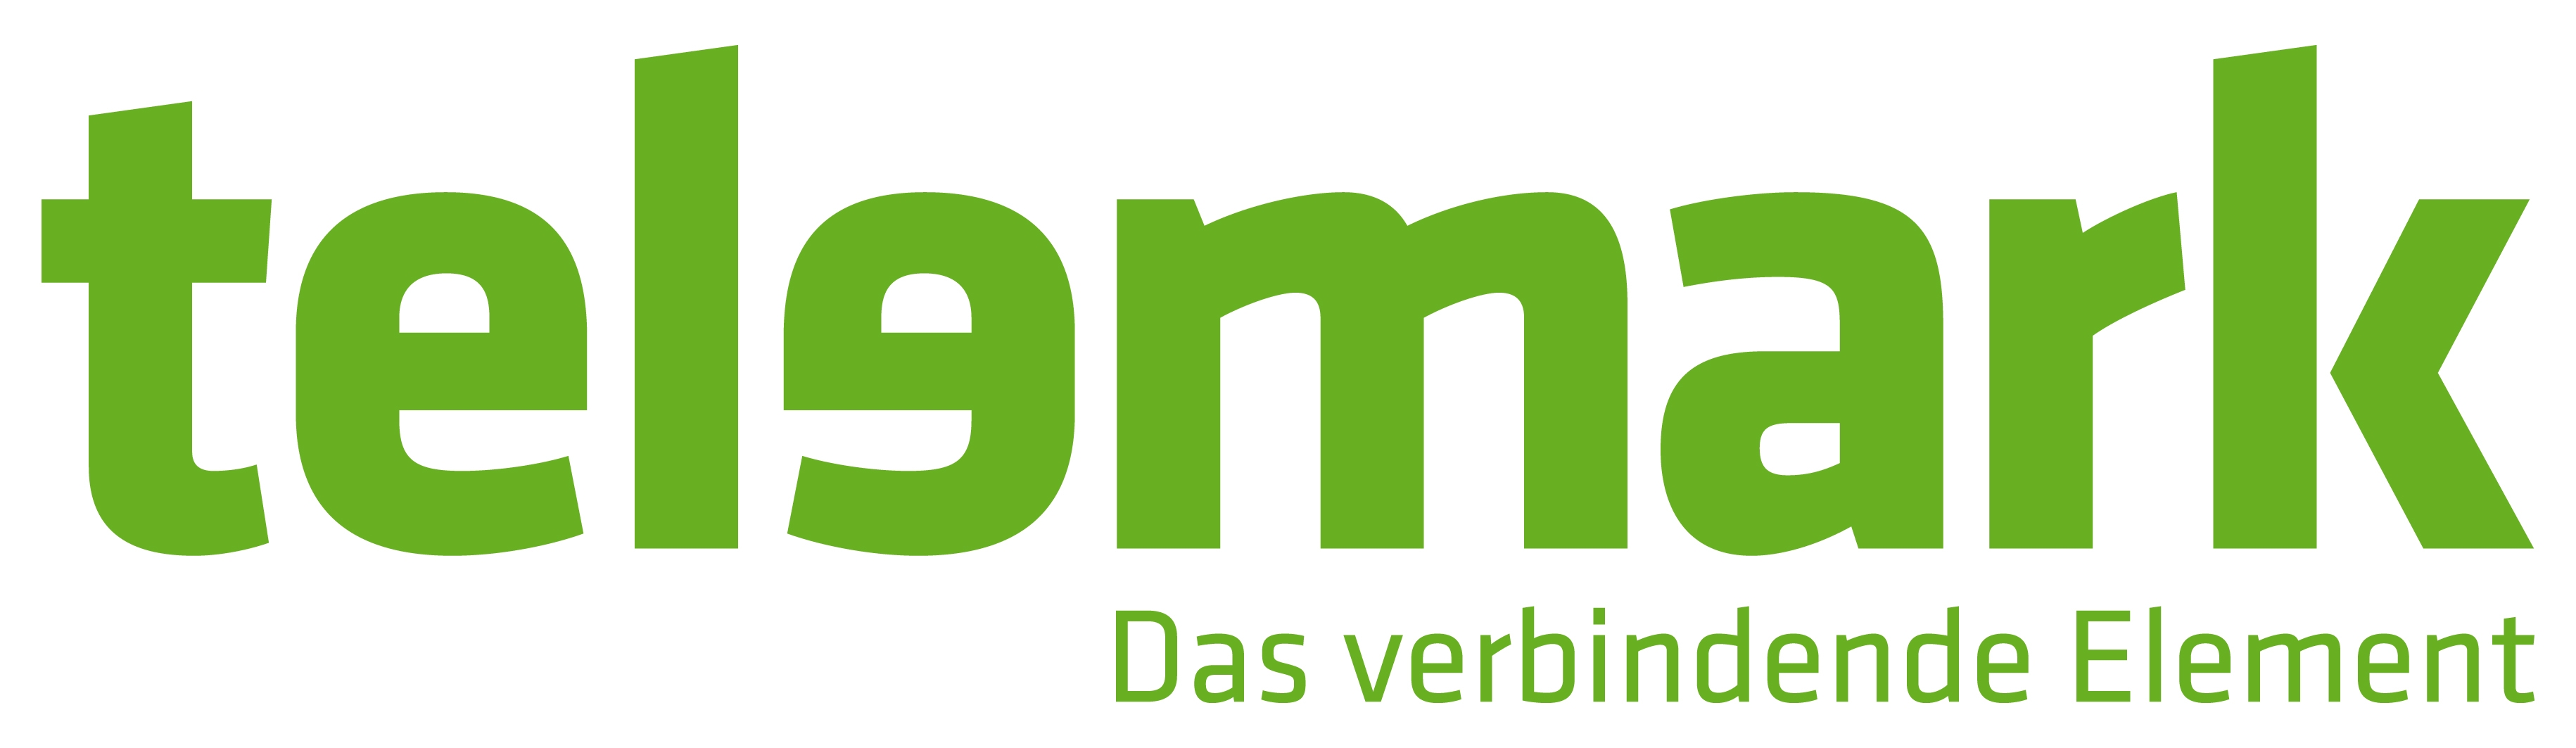 Logo Telemark Telekommunikationsgesellschaft Mark mbH